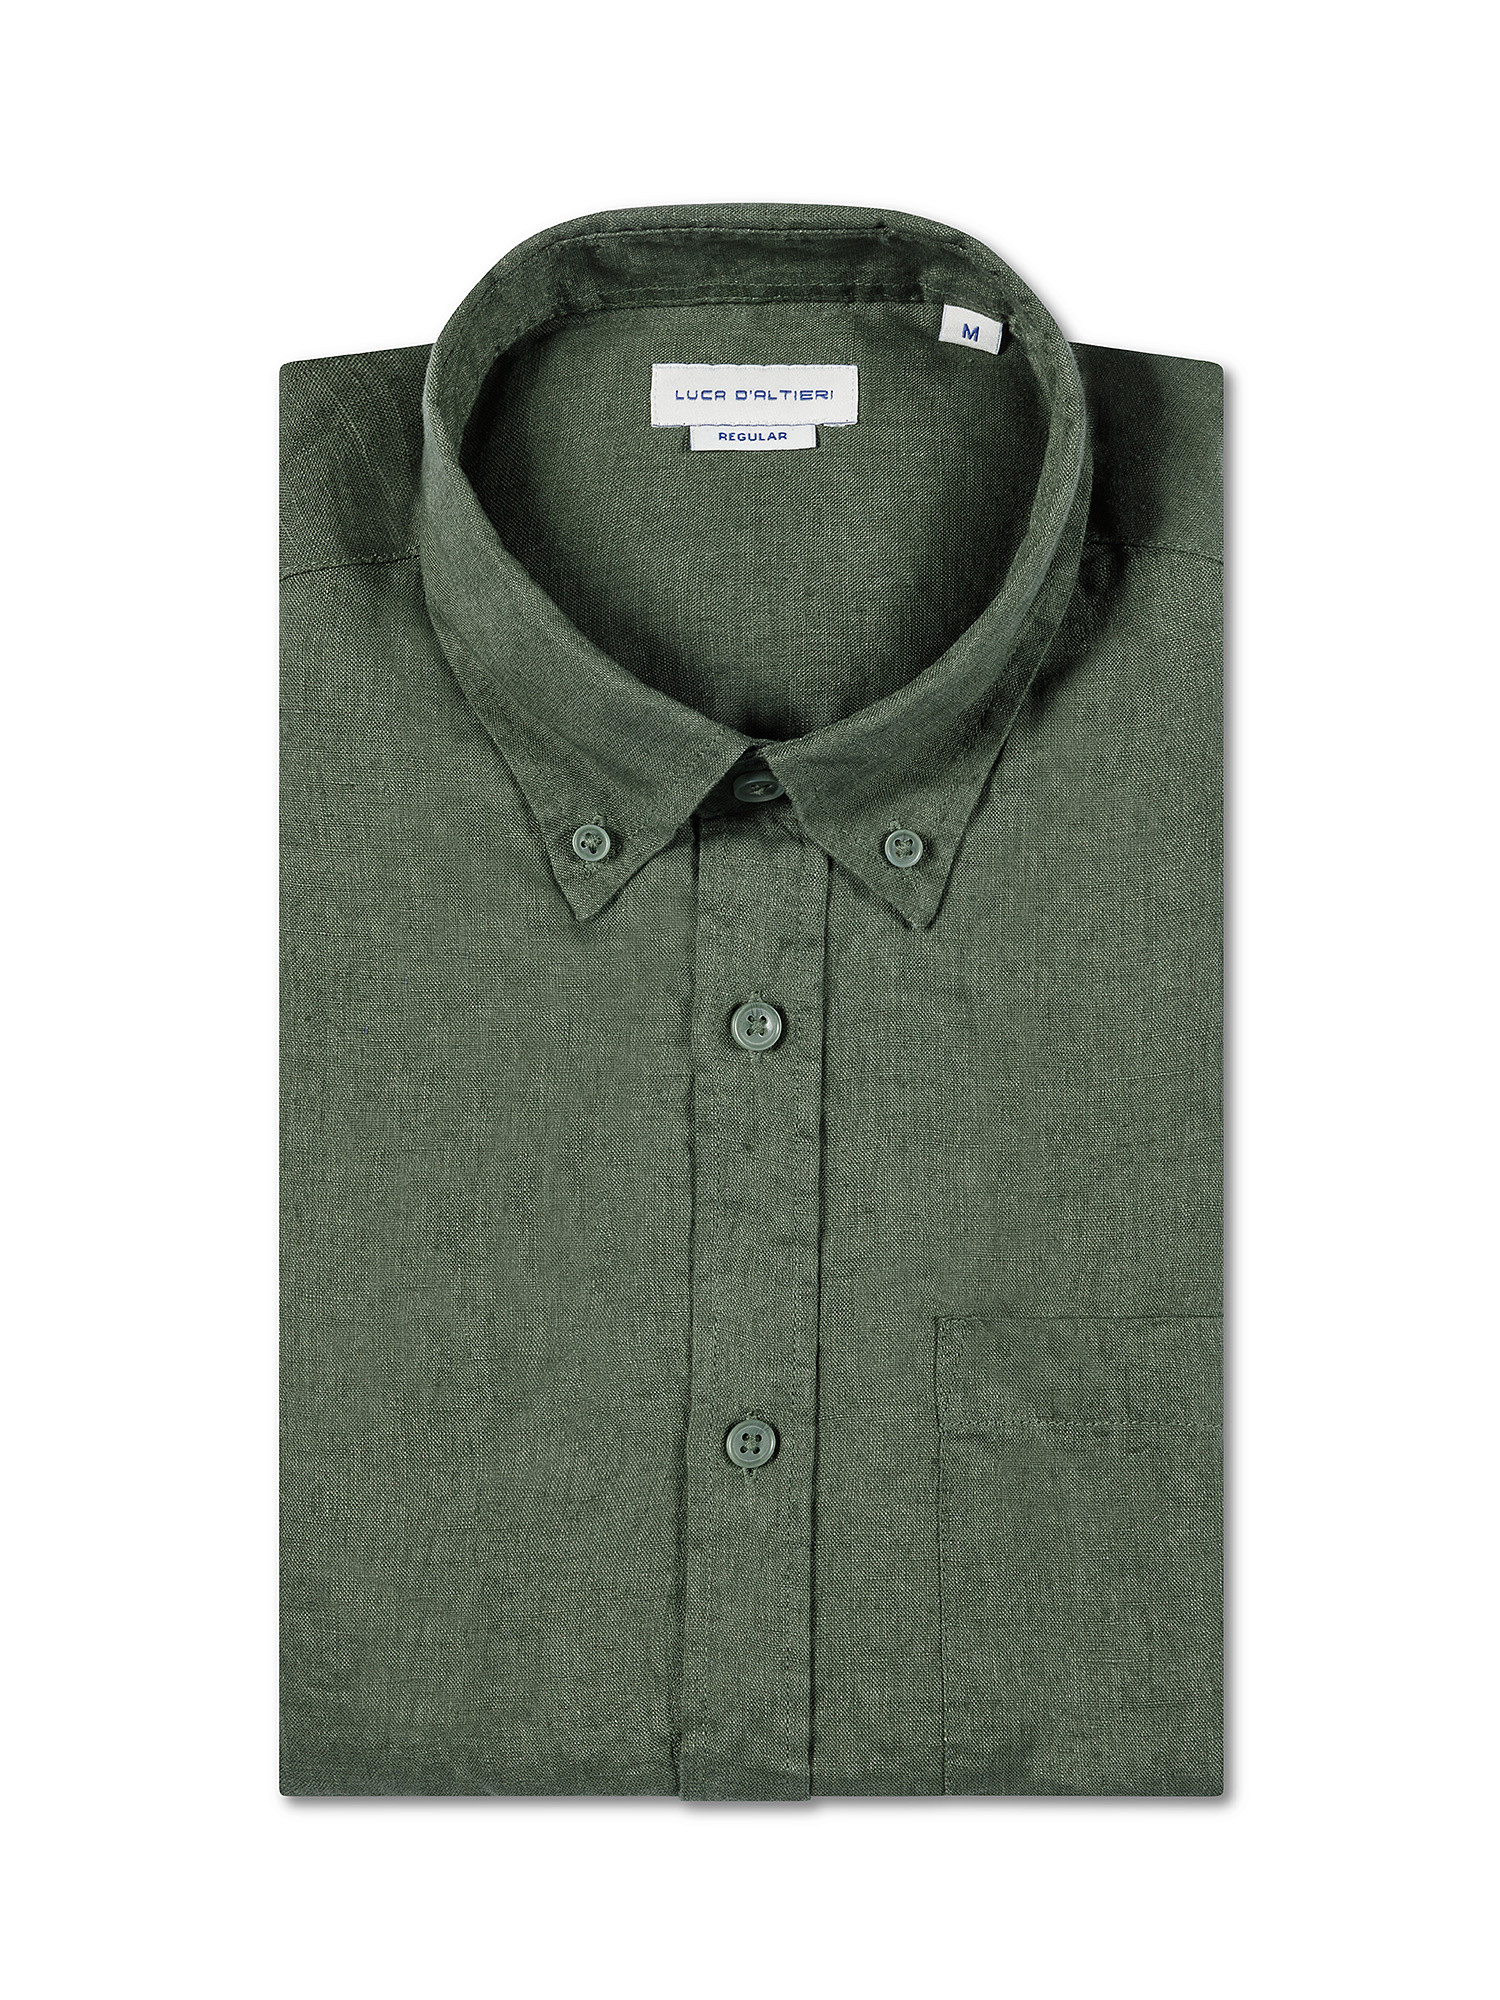 Luca D'Altieri - Regular fit shirt in pure linen, Green, large image number 2